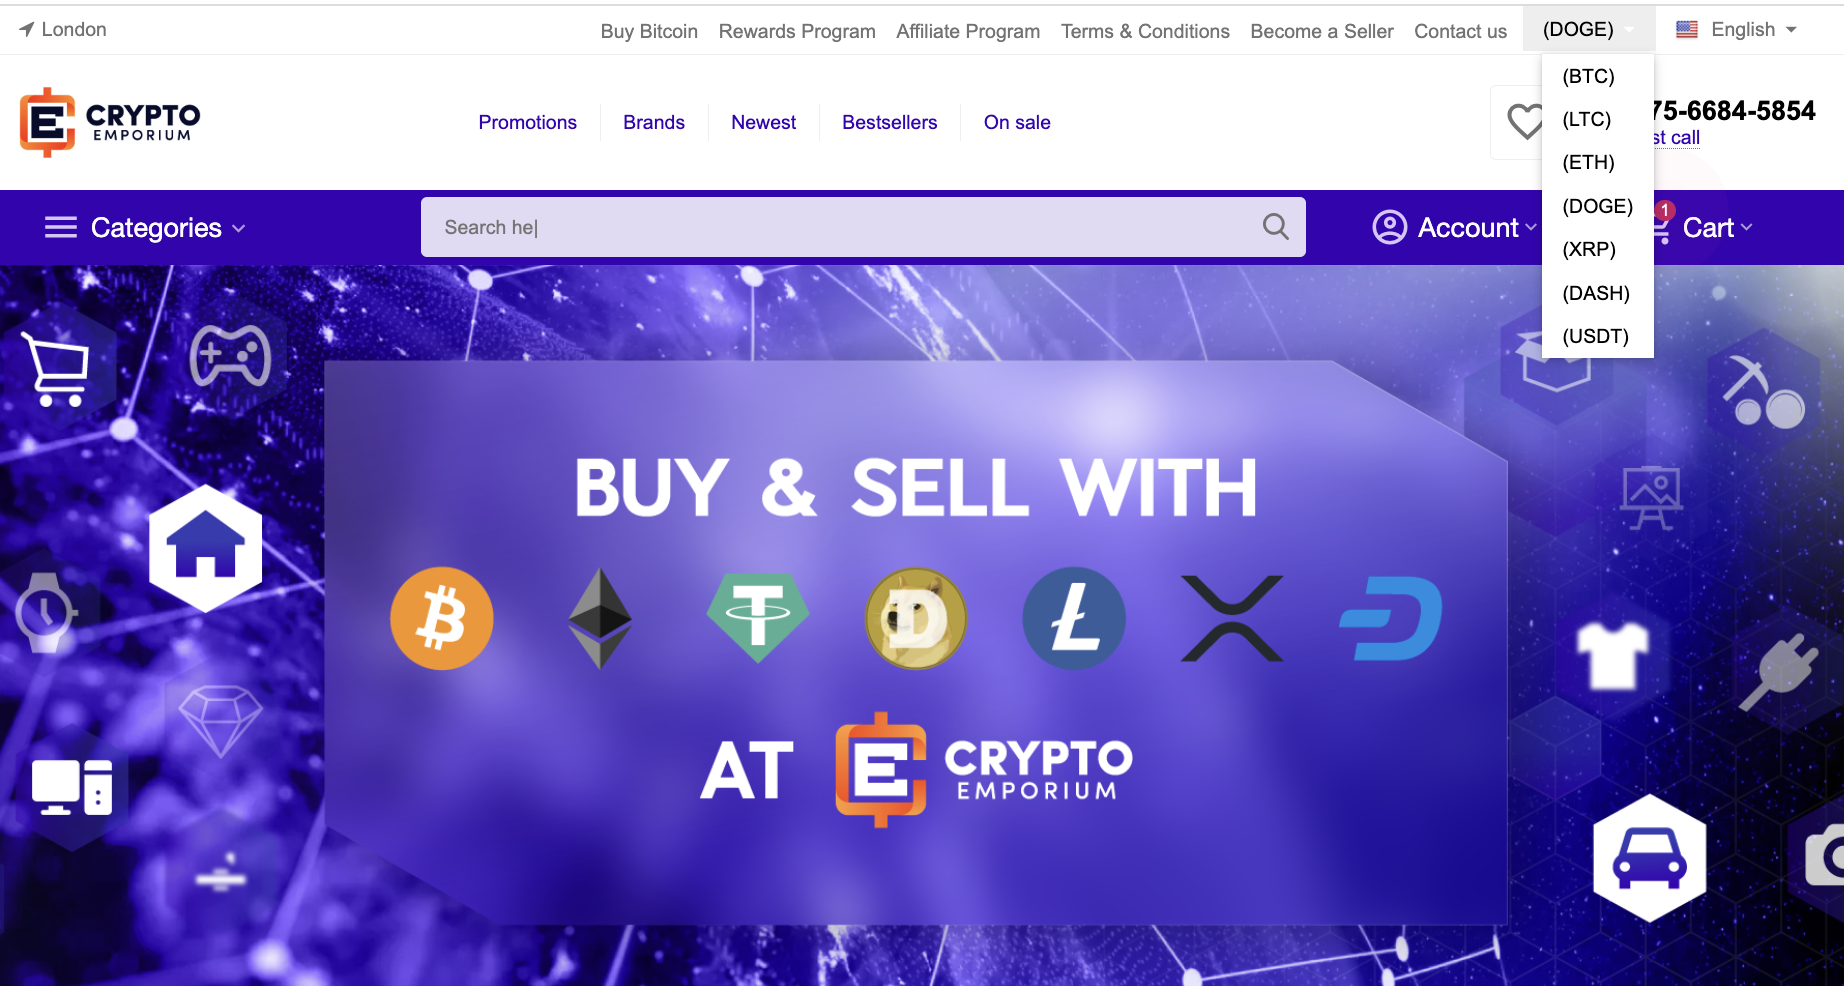 Crypto Emporium online shop